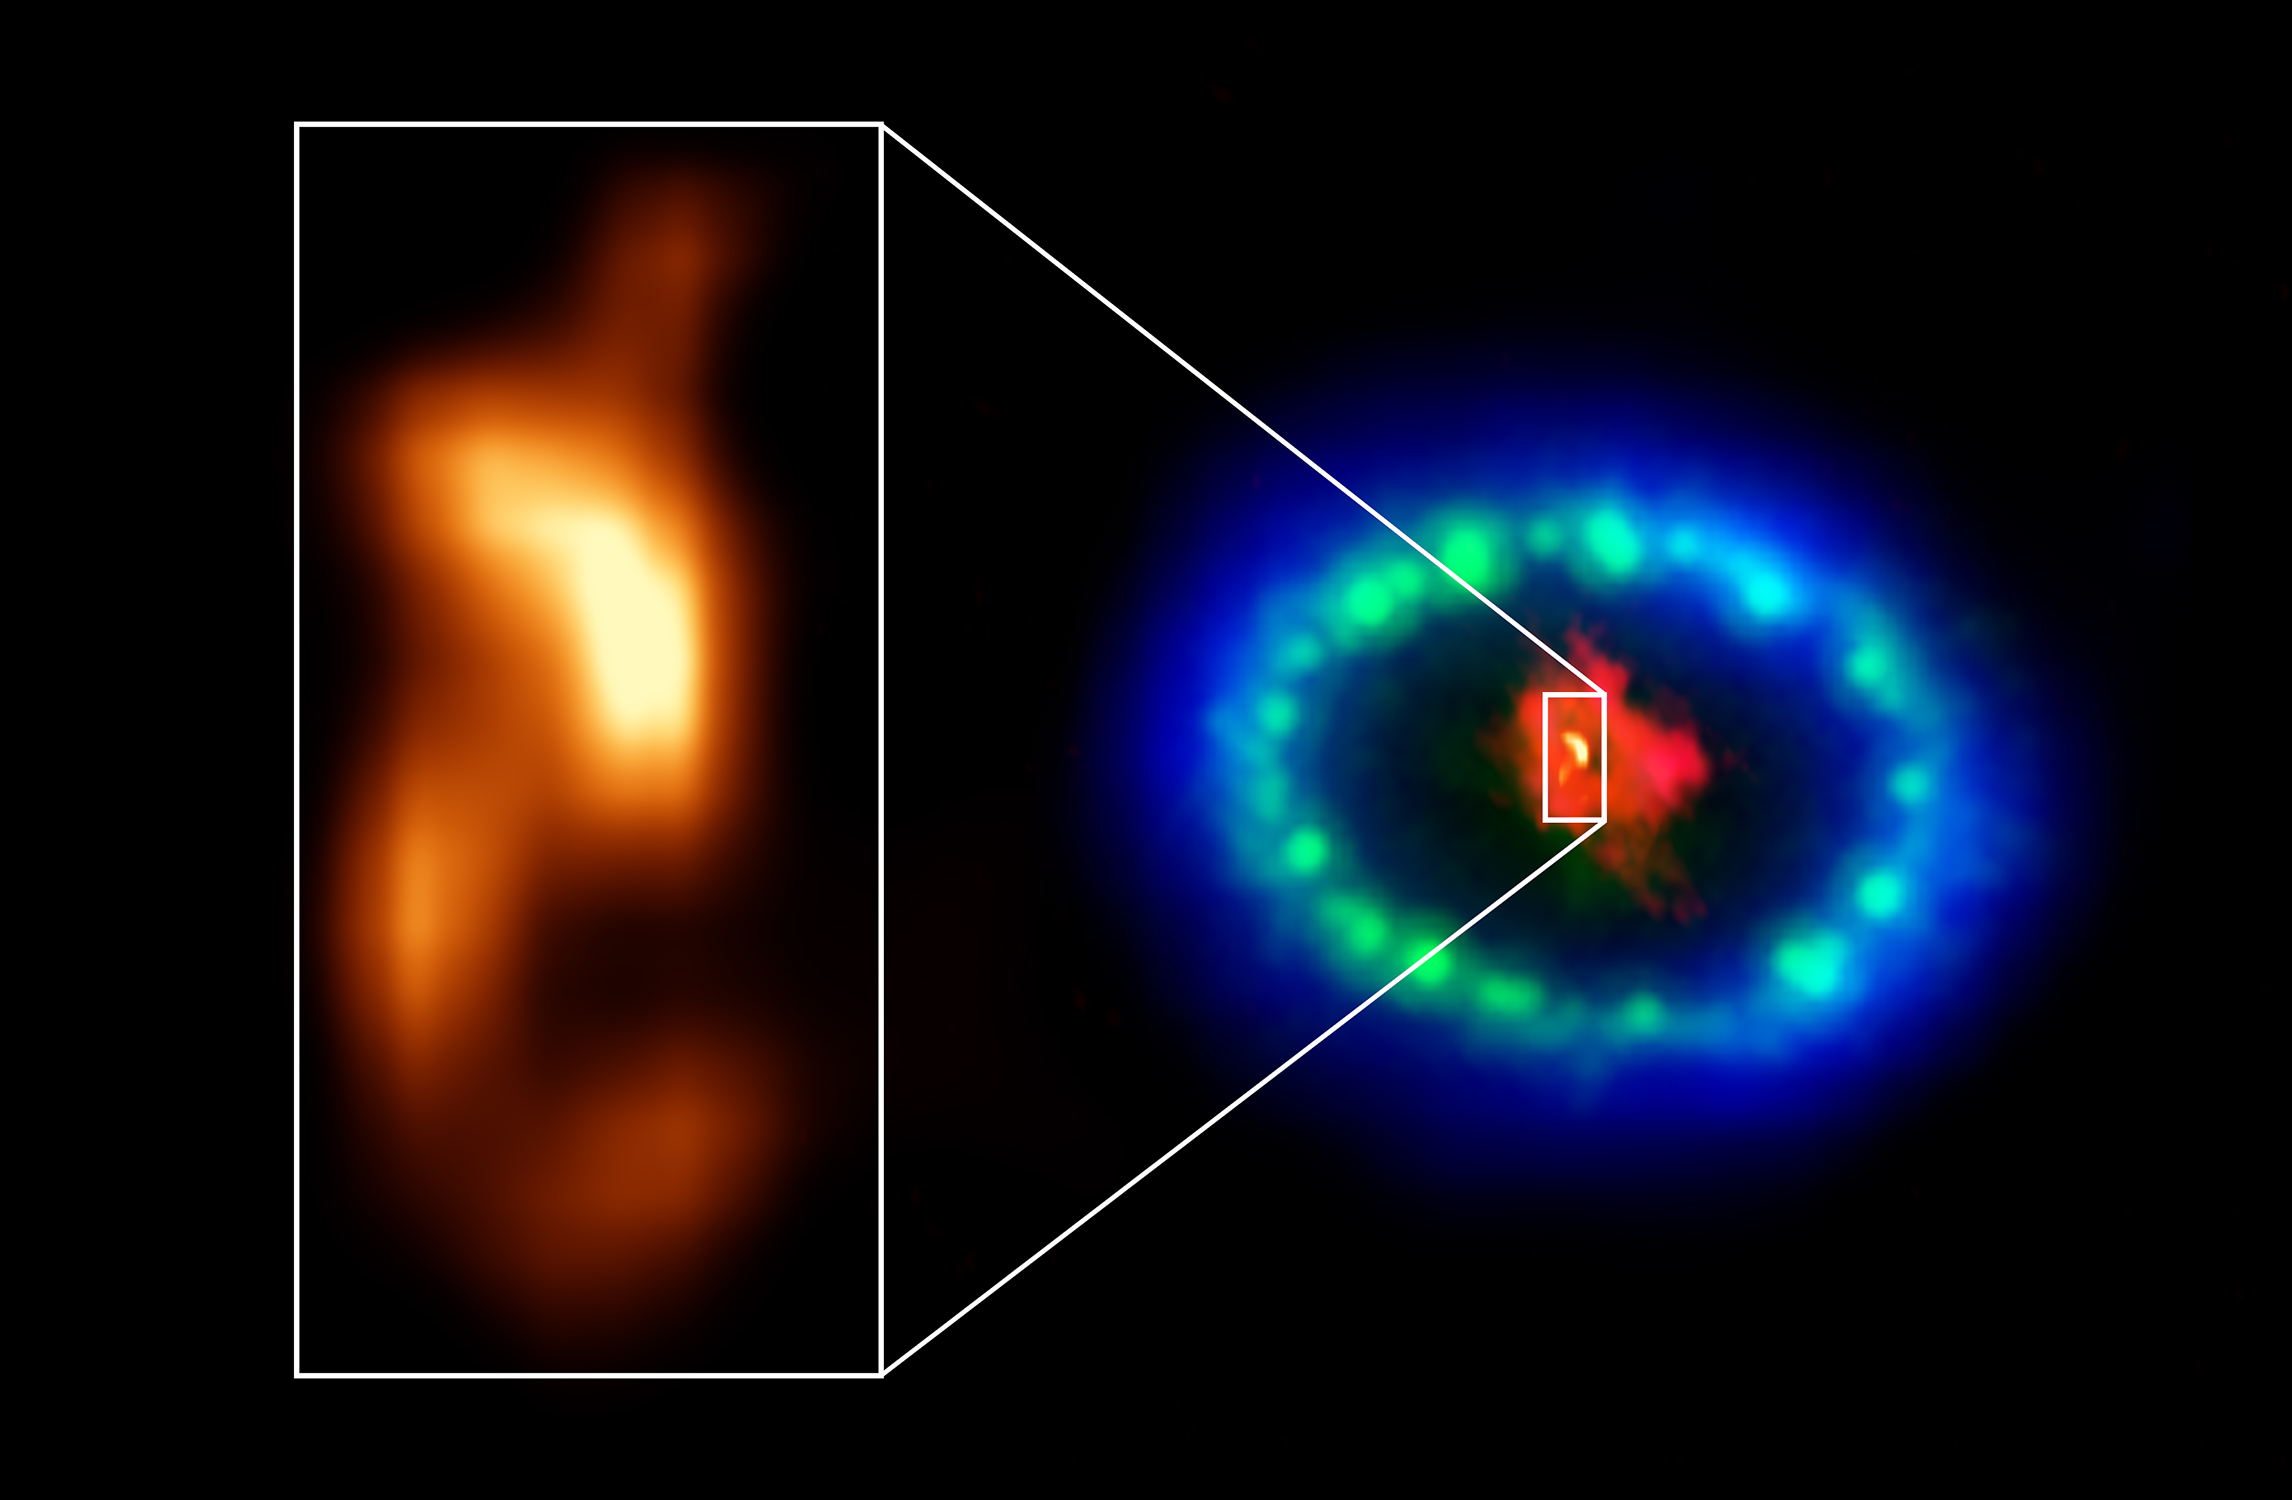 Nasa's supermassive black hole observed using the JWST.